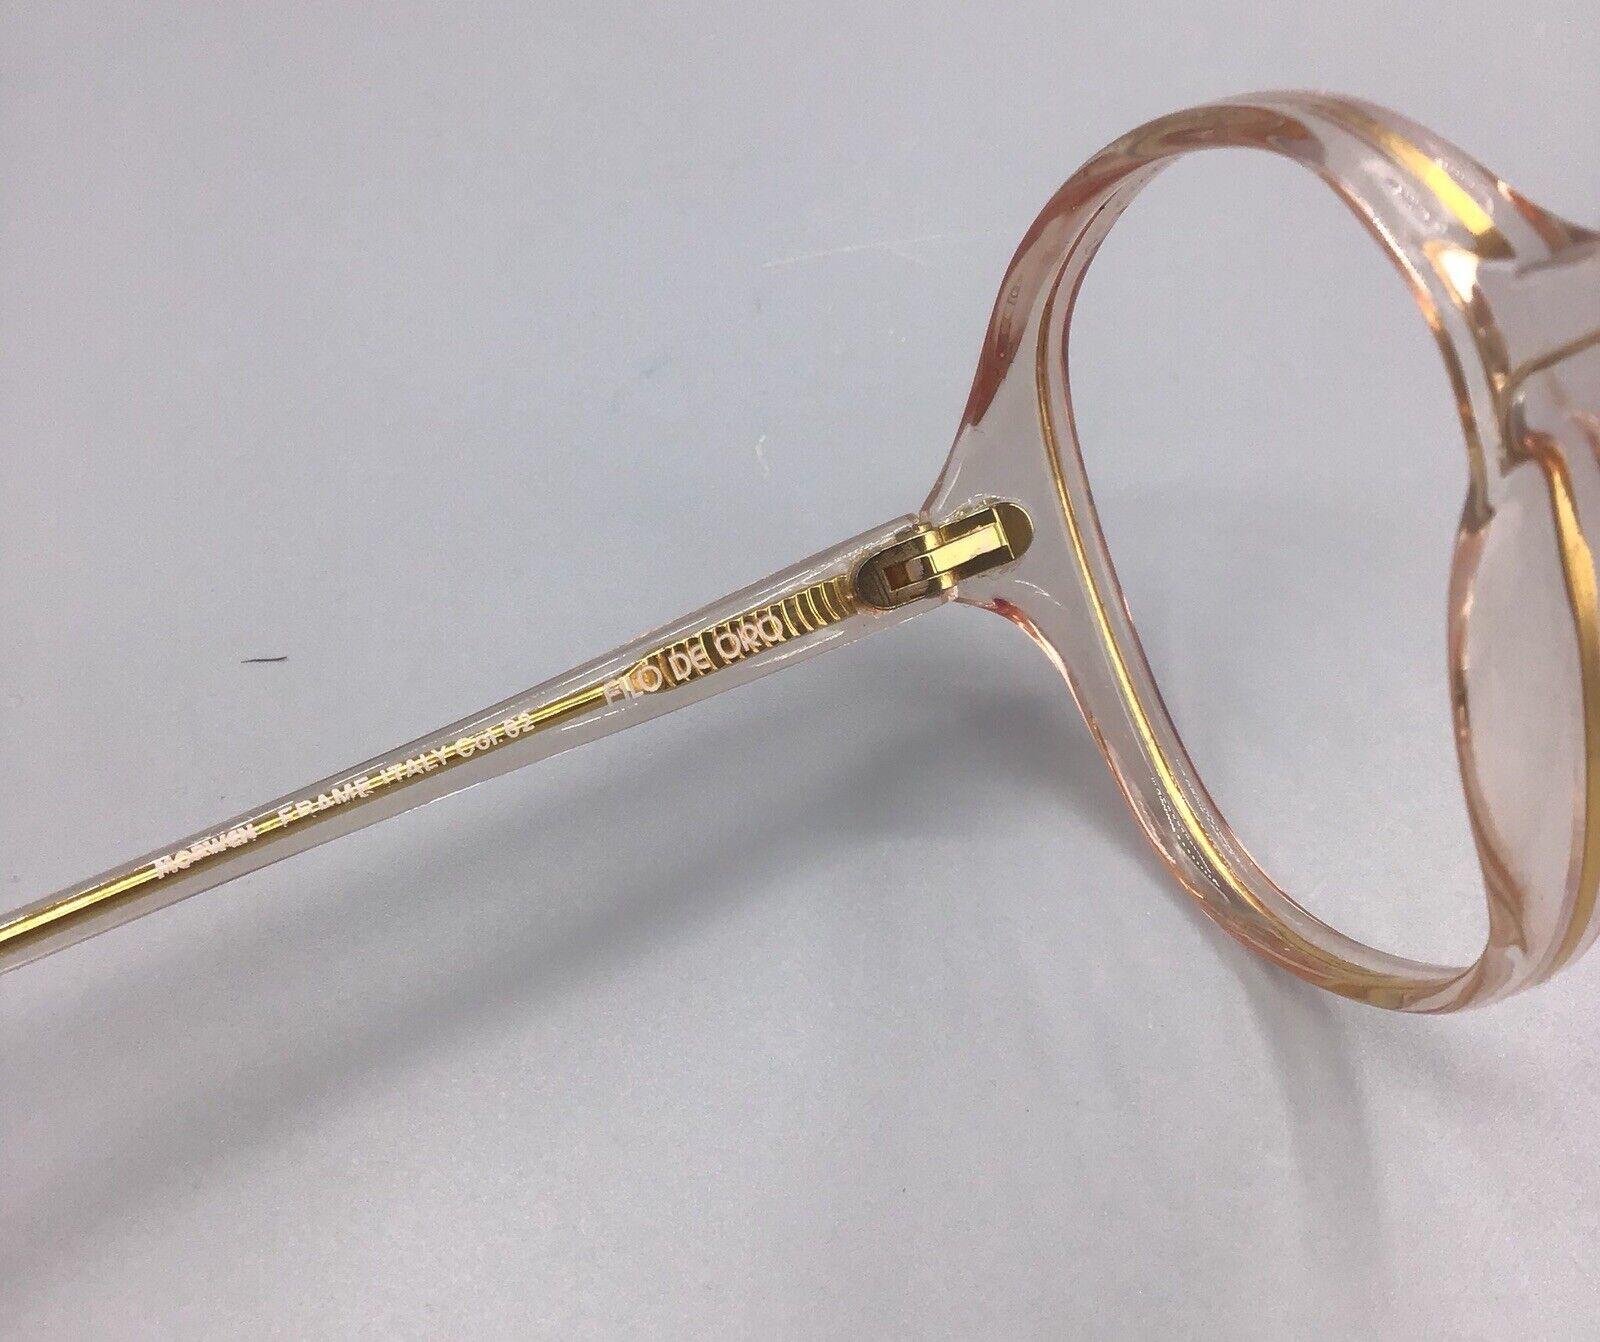 Morwen occhiale vintage eyewear frame italy col. 62 FILO DE ORO model GISELLA